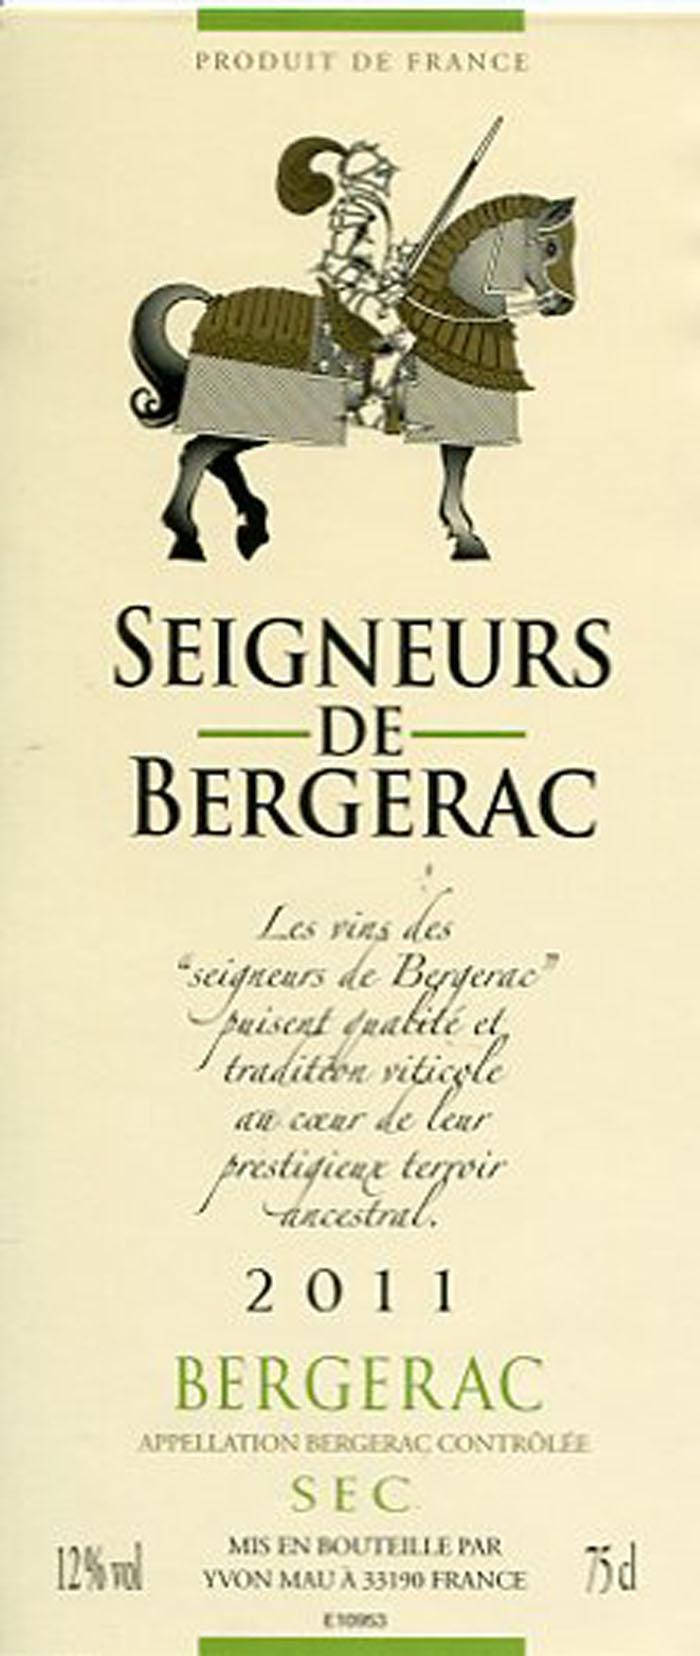 Seigneurs De Bergerac A.O.C. Bergerac Seigneurs de Bergerac wines flourish on the sunny slopes of the Dordogne Valley.